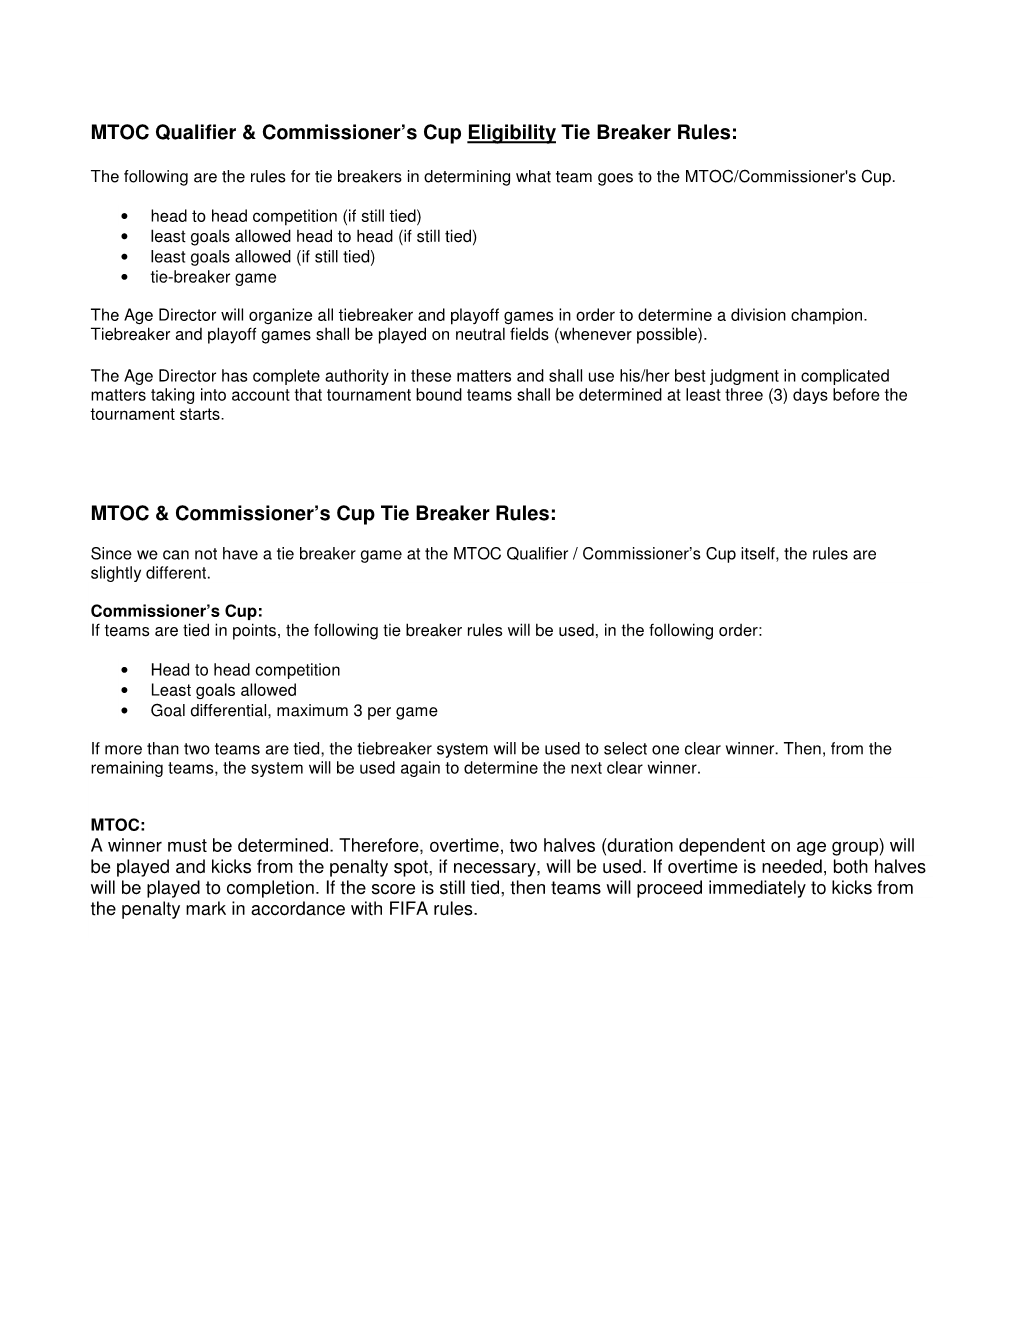 MTOC & Commissioner's Cup Tie Breaker Rules